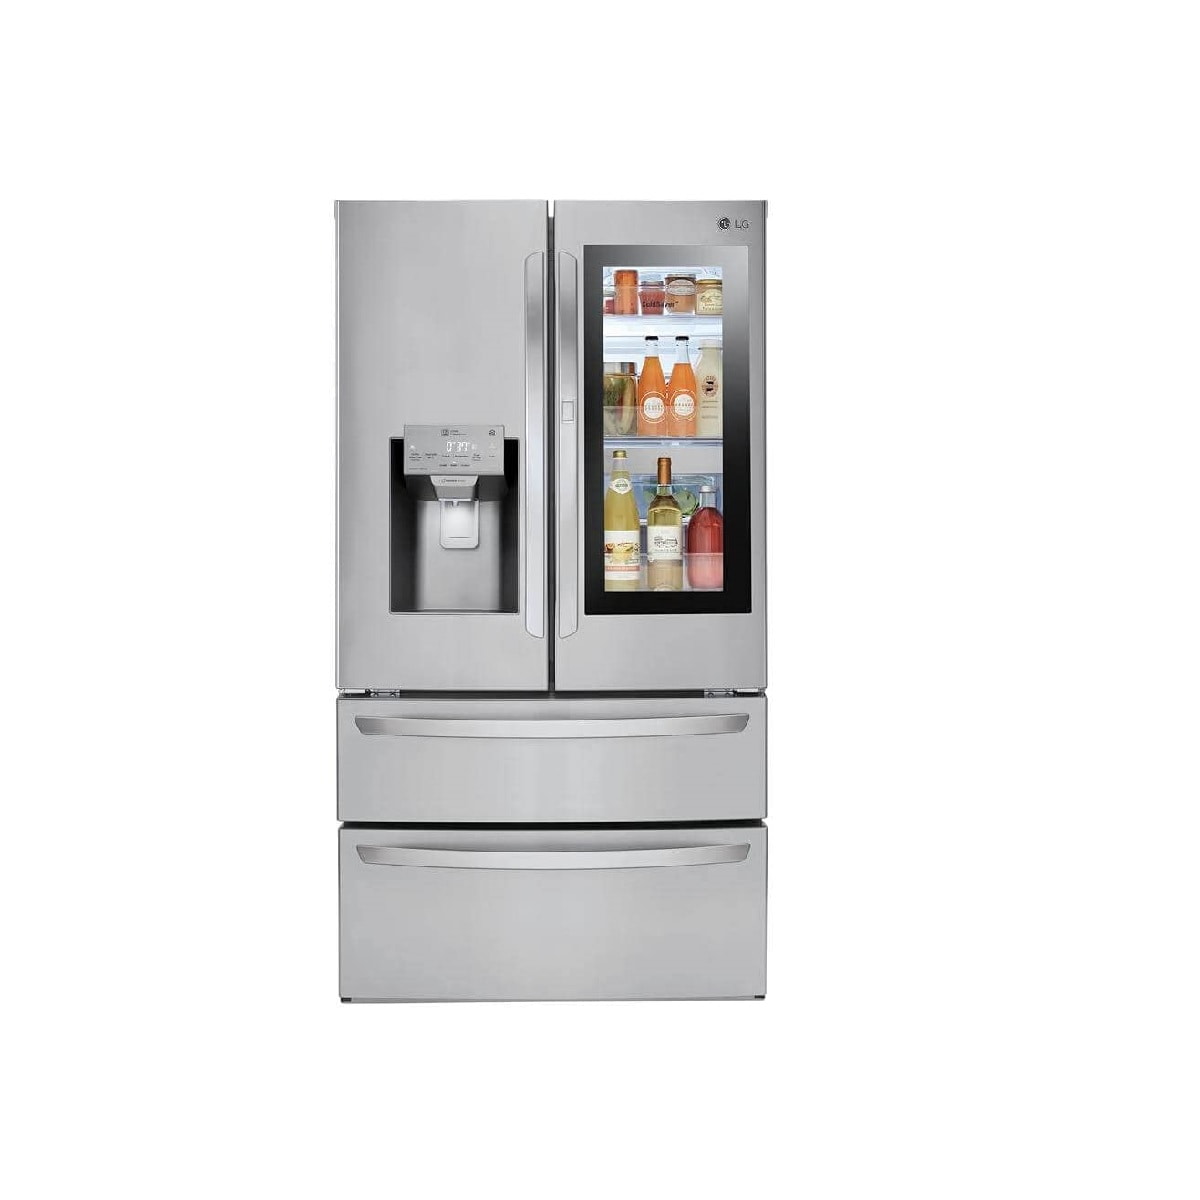 LG refrigerators bottom freezer problems and solutions - MachineLounge